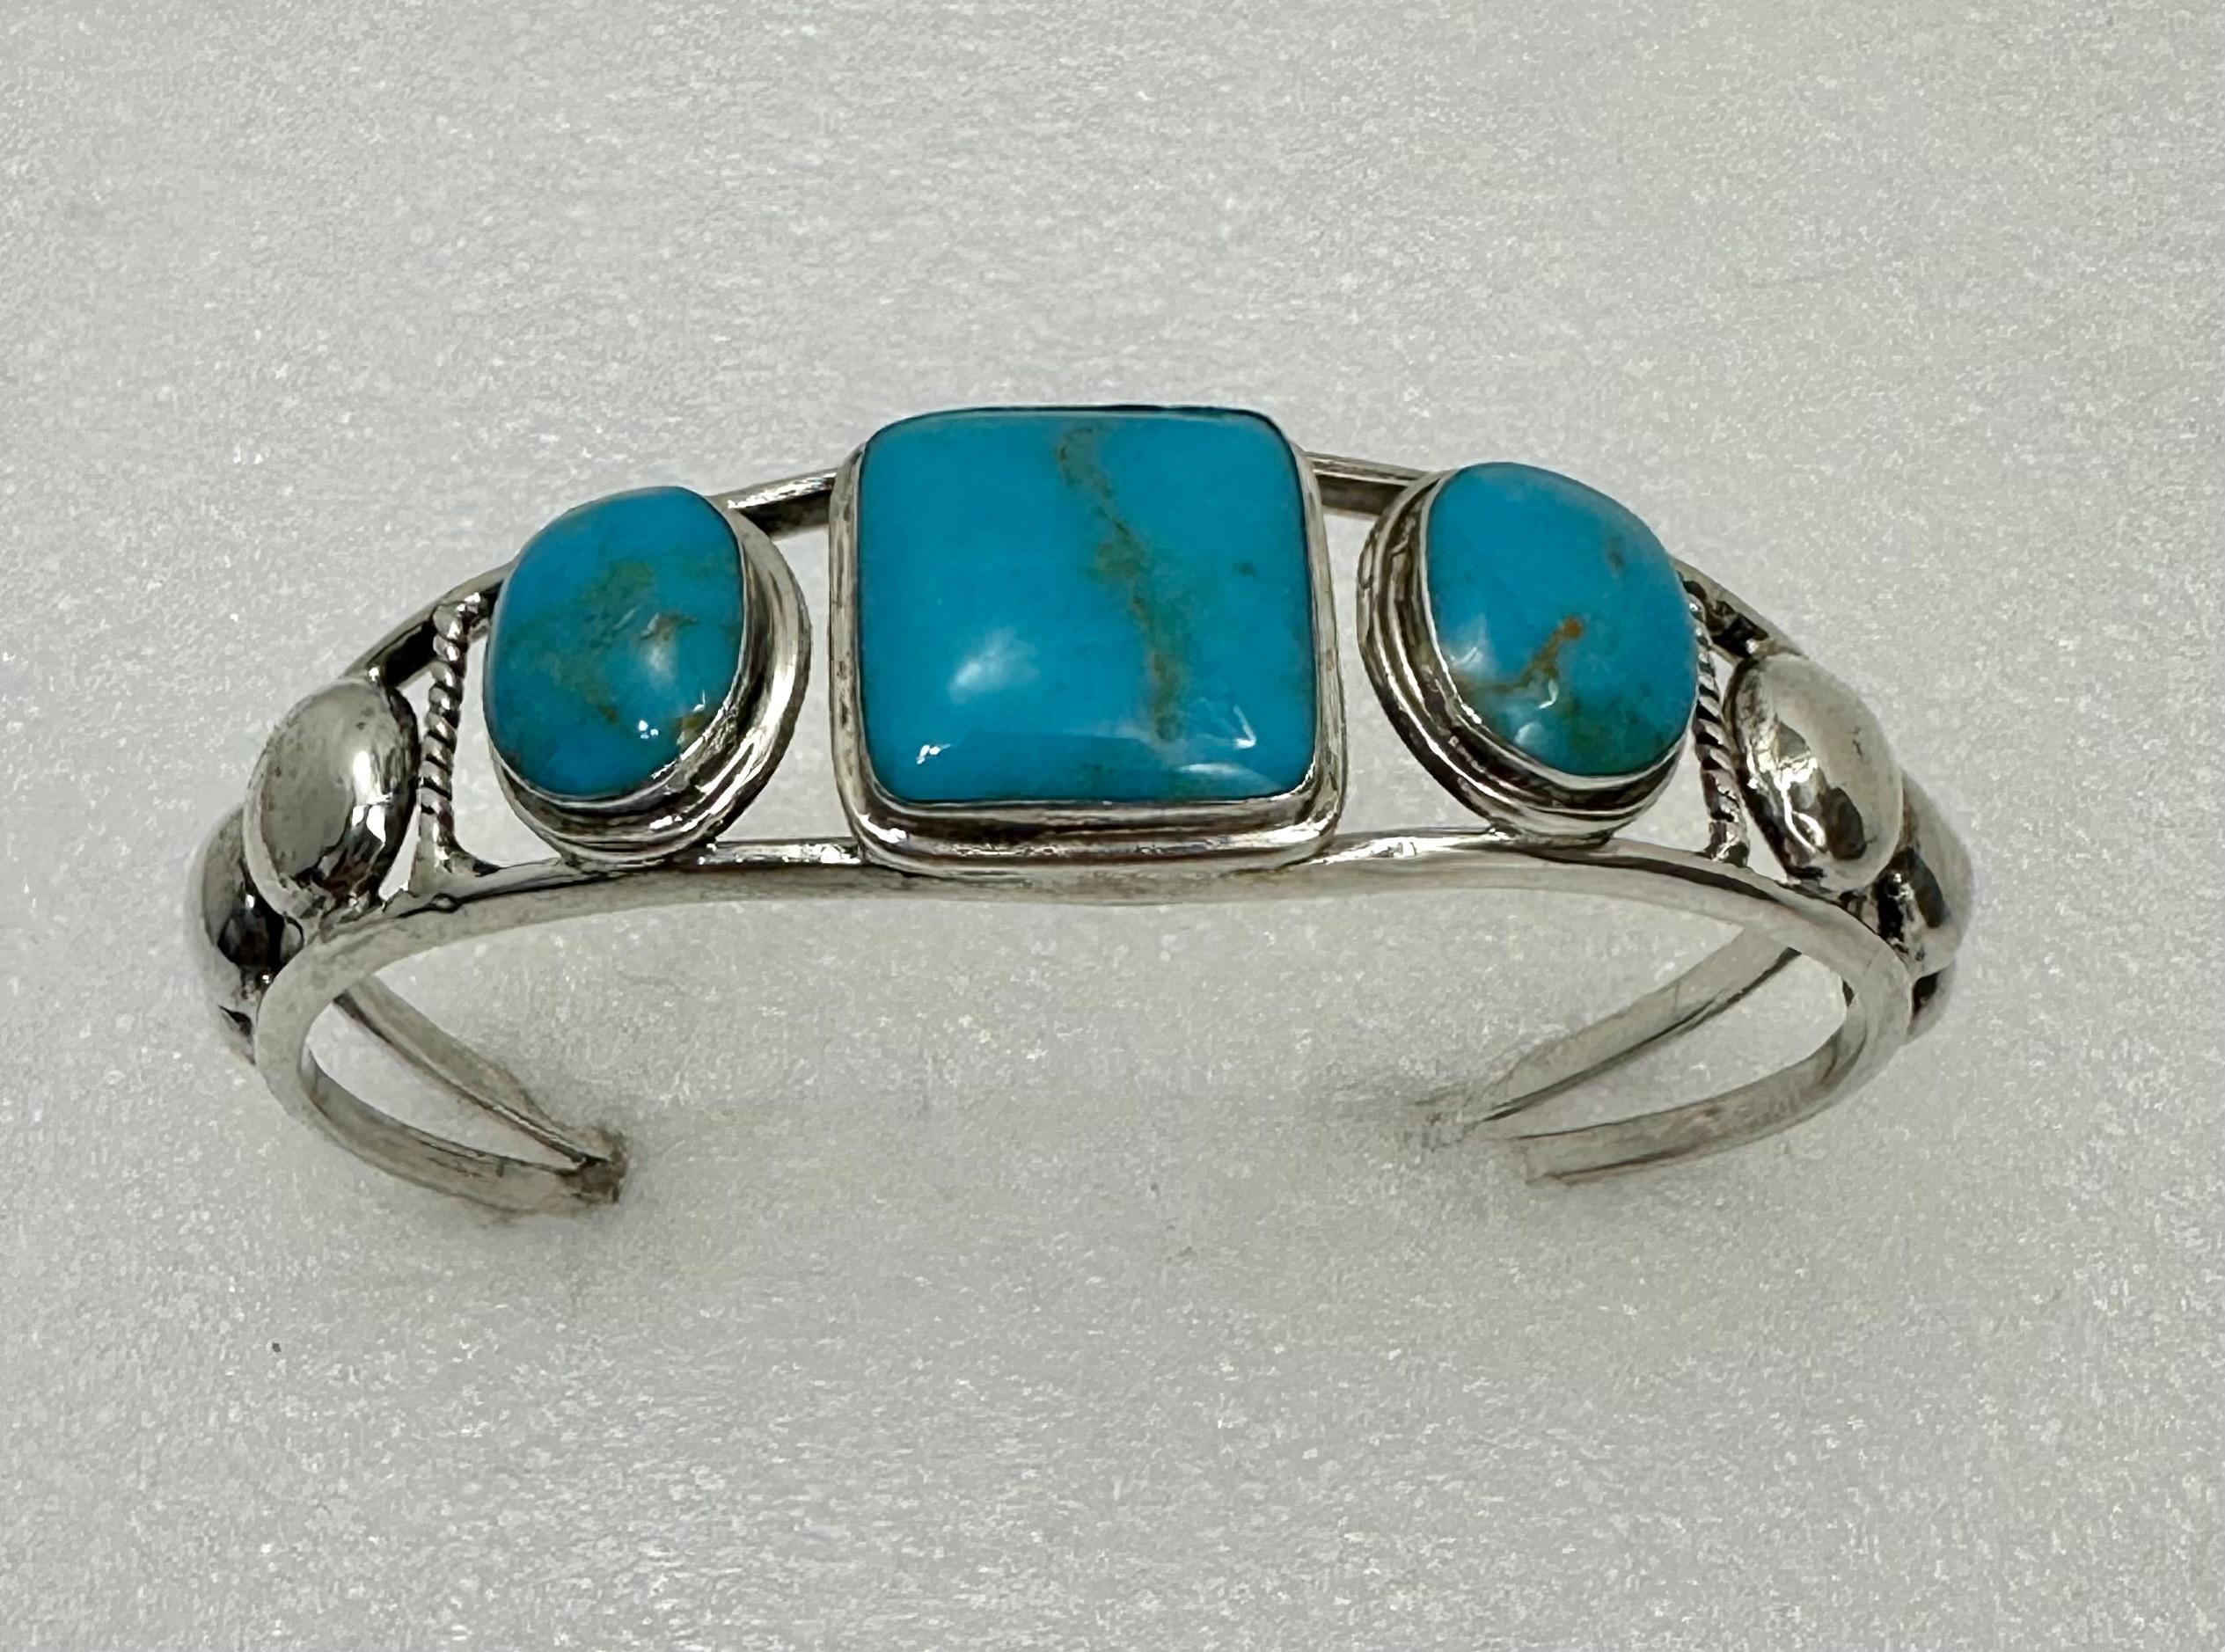 Sterling Silver .925 Kingman Turquoise Navajo Cuff Bracelet
Measures approx:
2 1/2